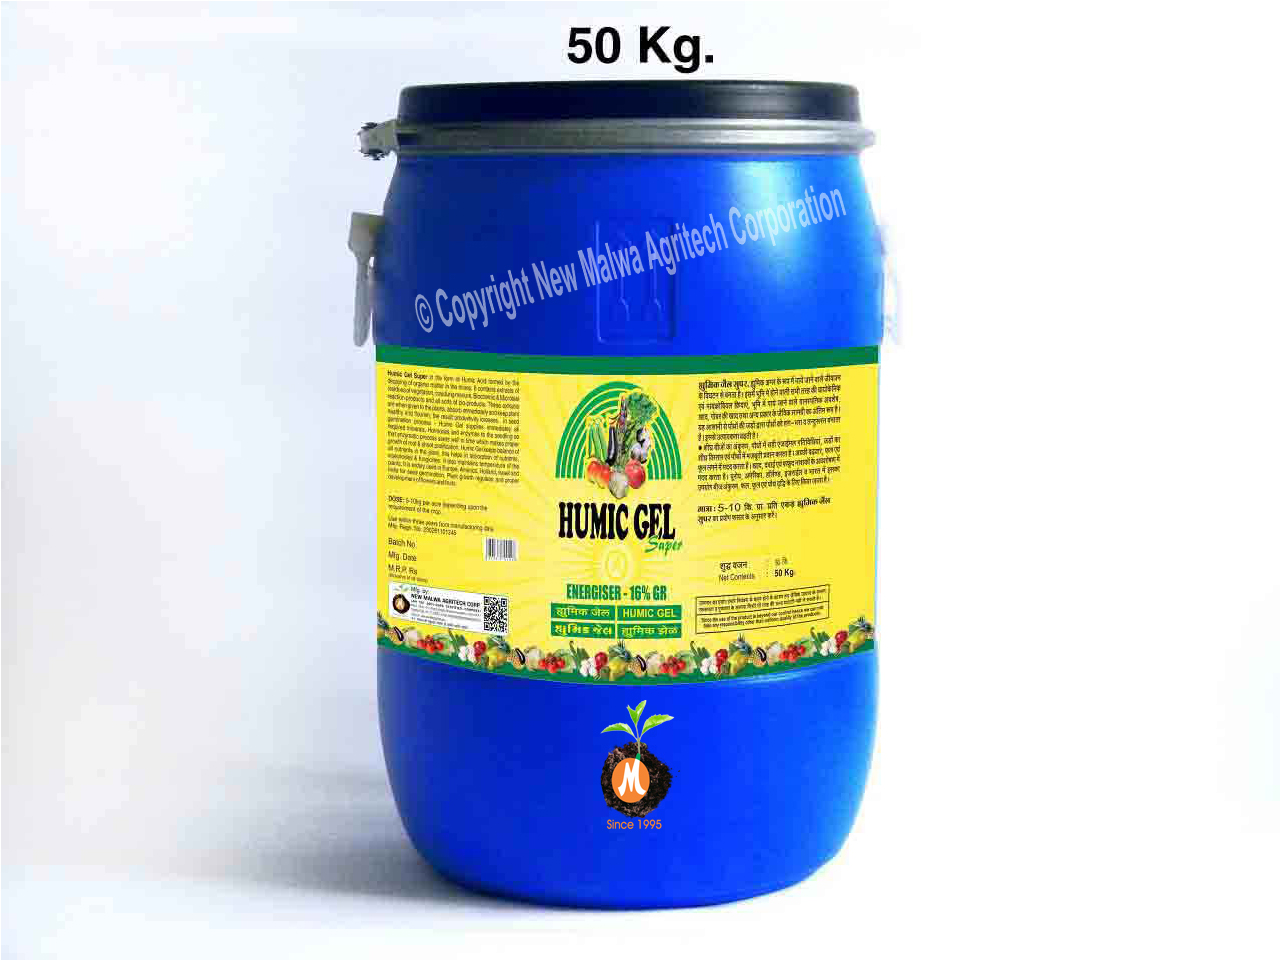 Humic Gel Granules Humic Acid in 50 kg. Drum for vegetables & crops